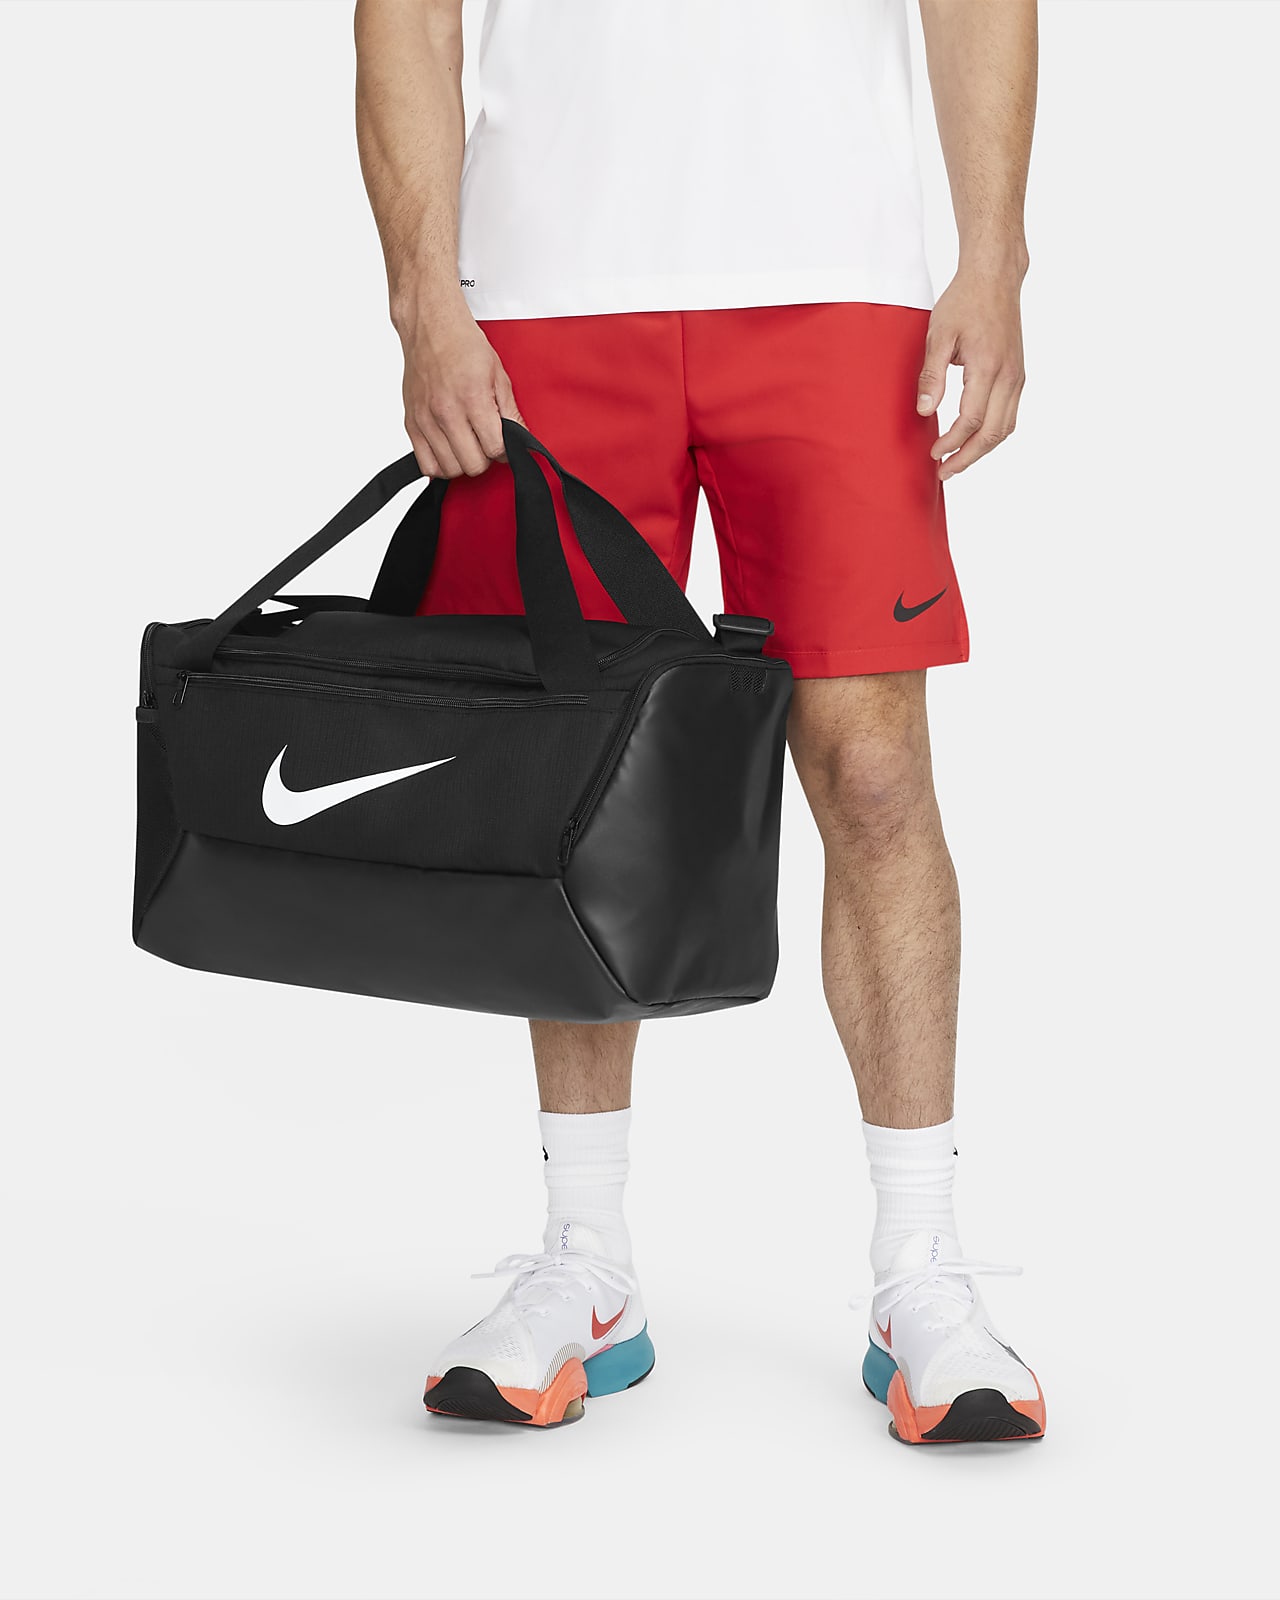 Nike Brasilia Duffel Small 41l - Best Price in Singapore - Feb